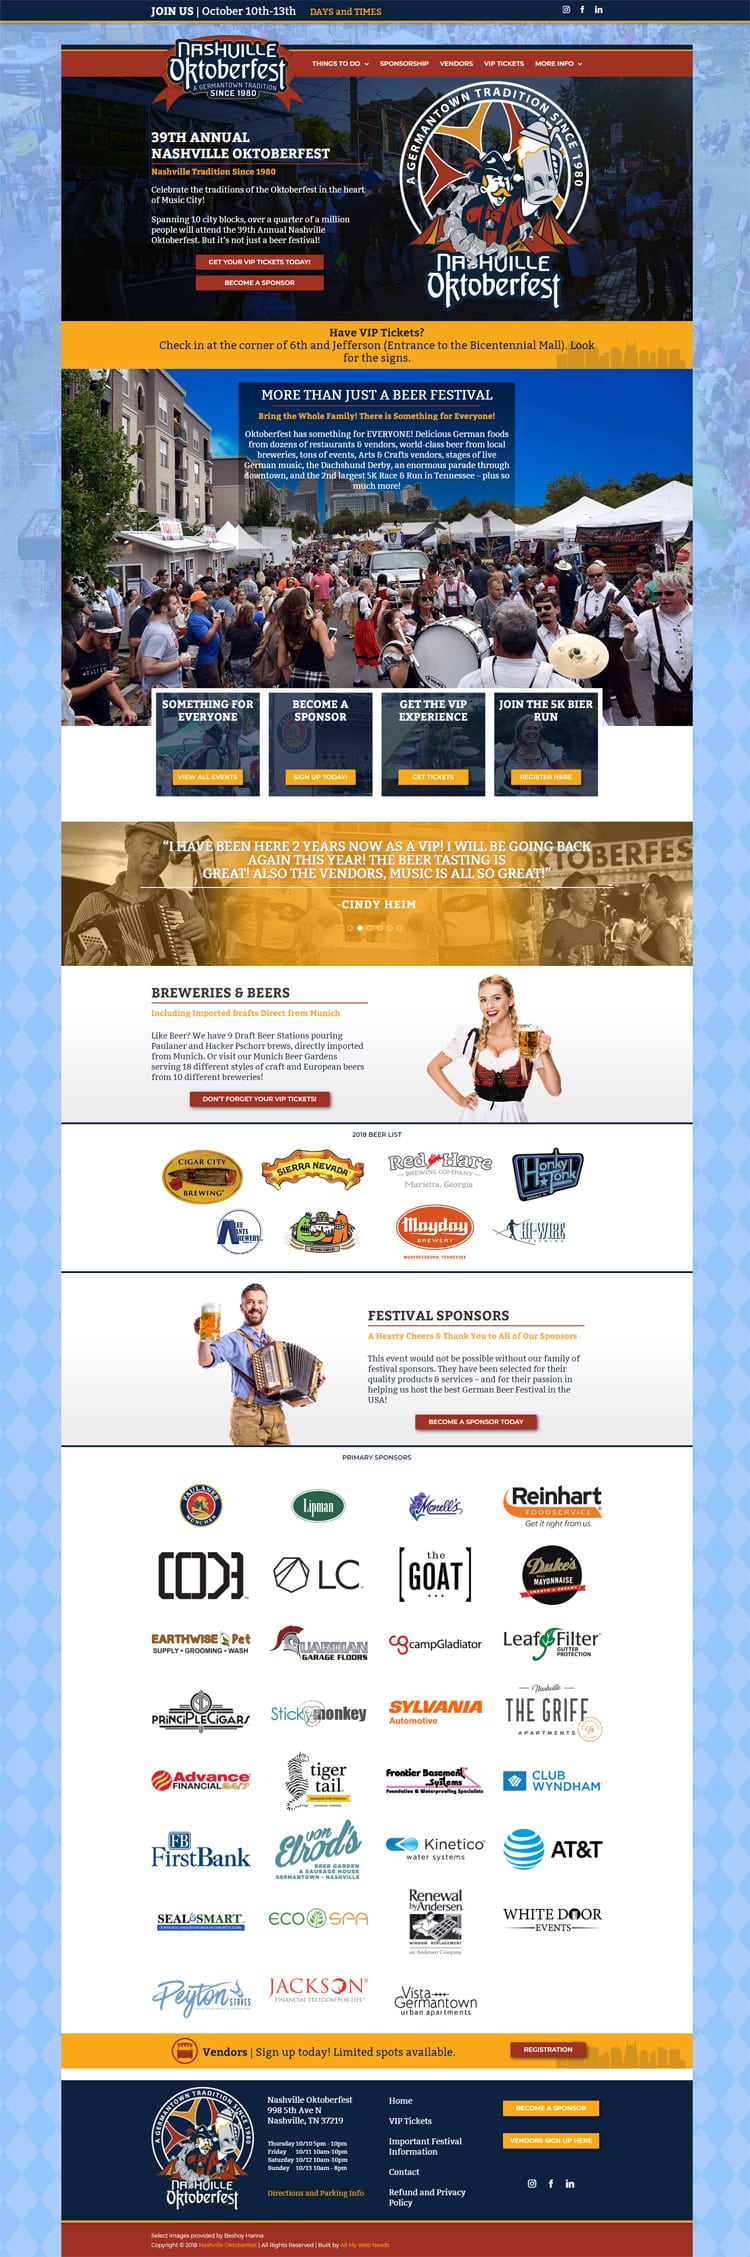 The Nashville Oktoberfest web design